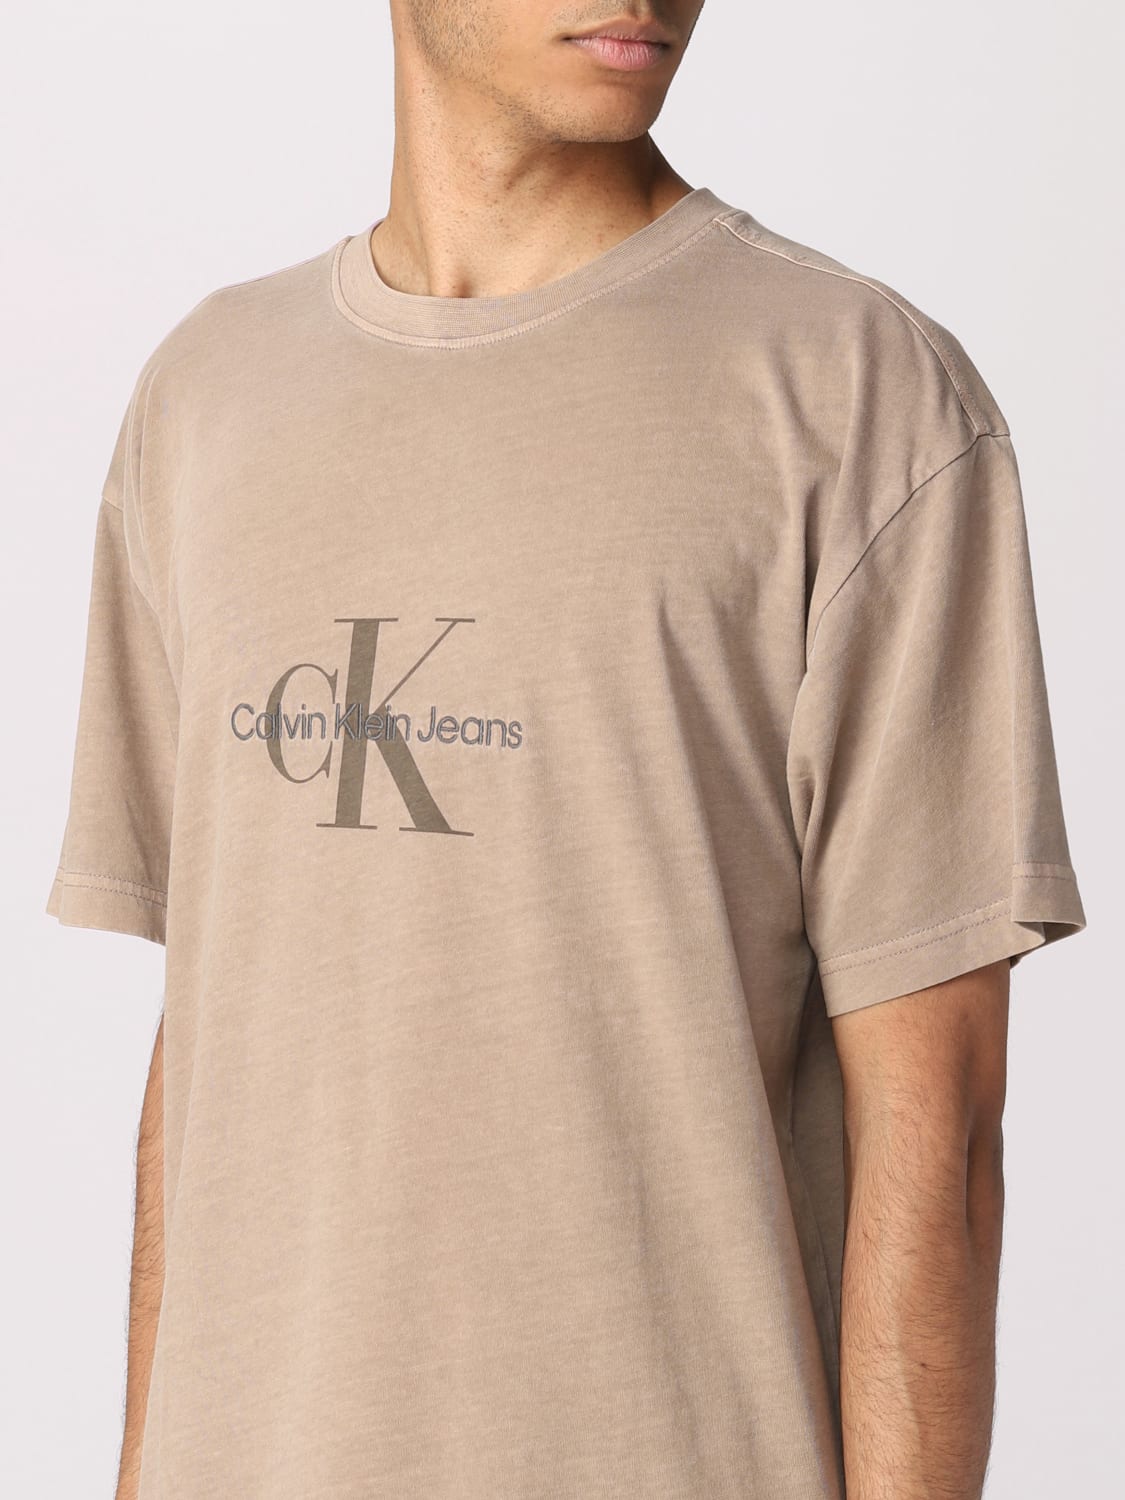 CALVIN KLEIN JEANS：Tシャツ メンズ - ブラウン | GIGLIO.COM